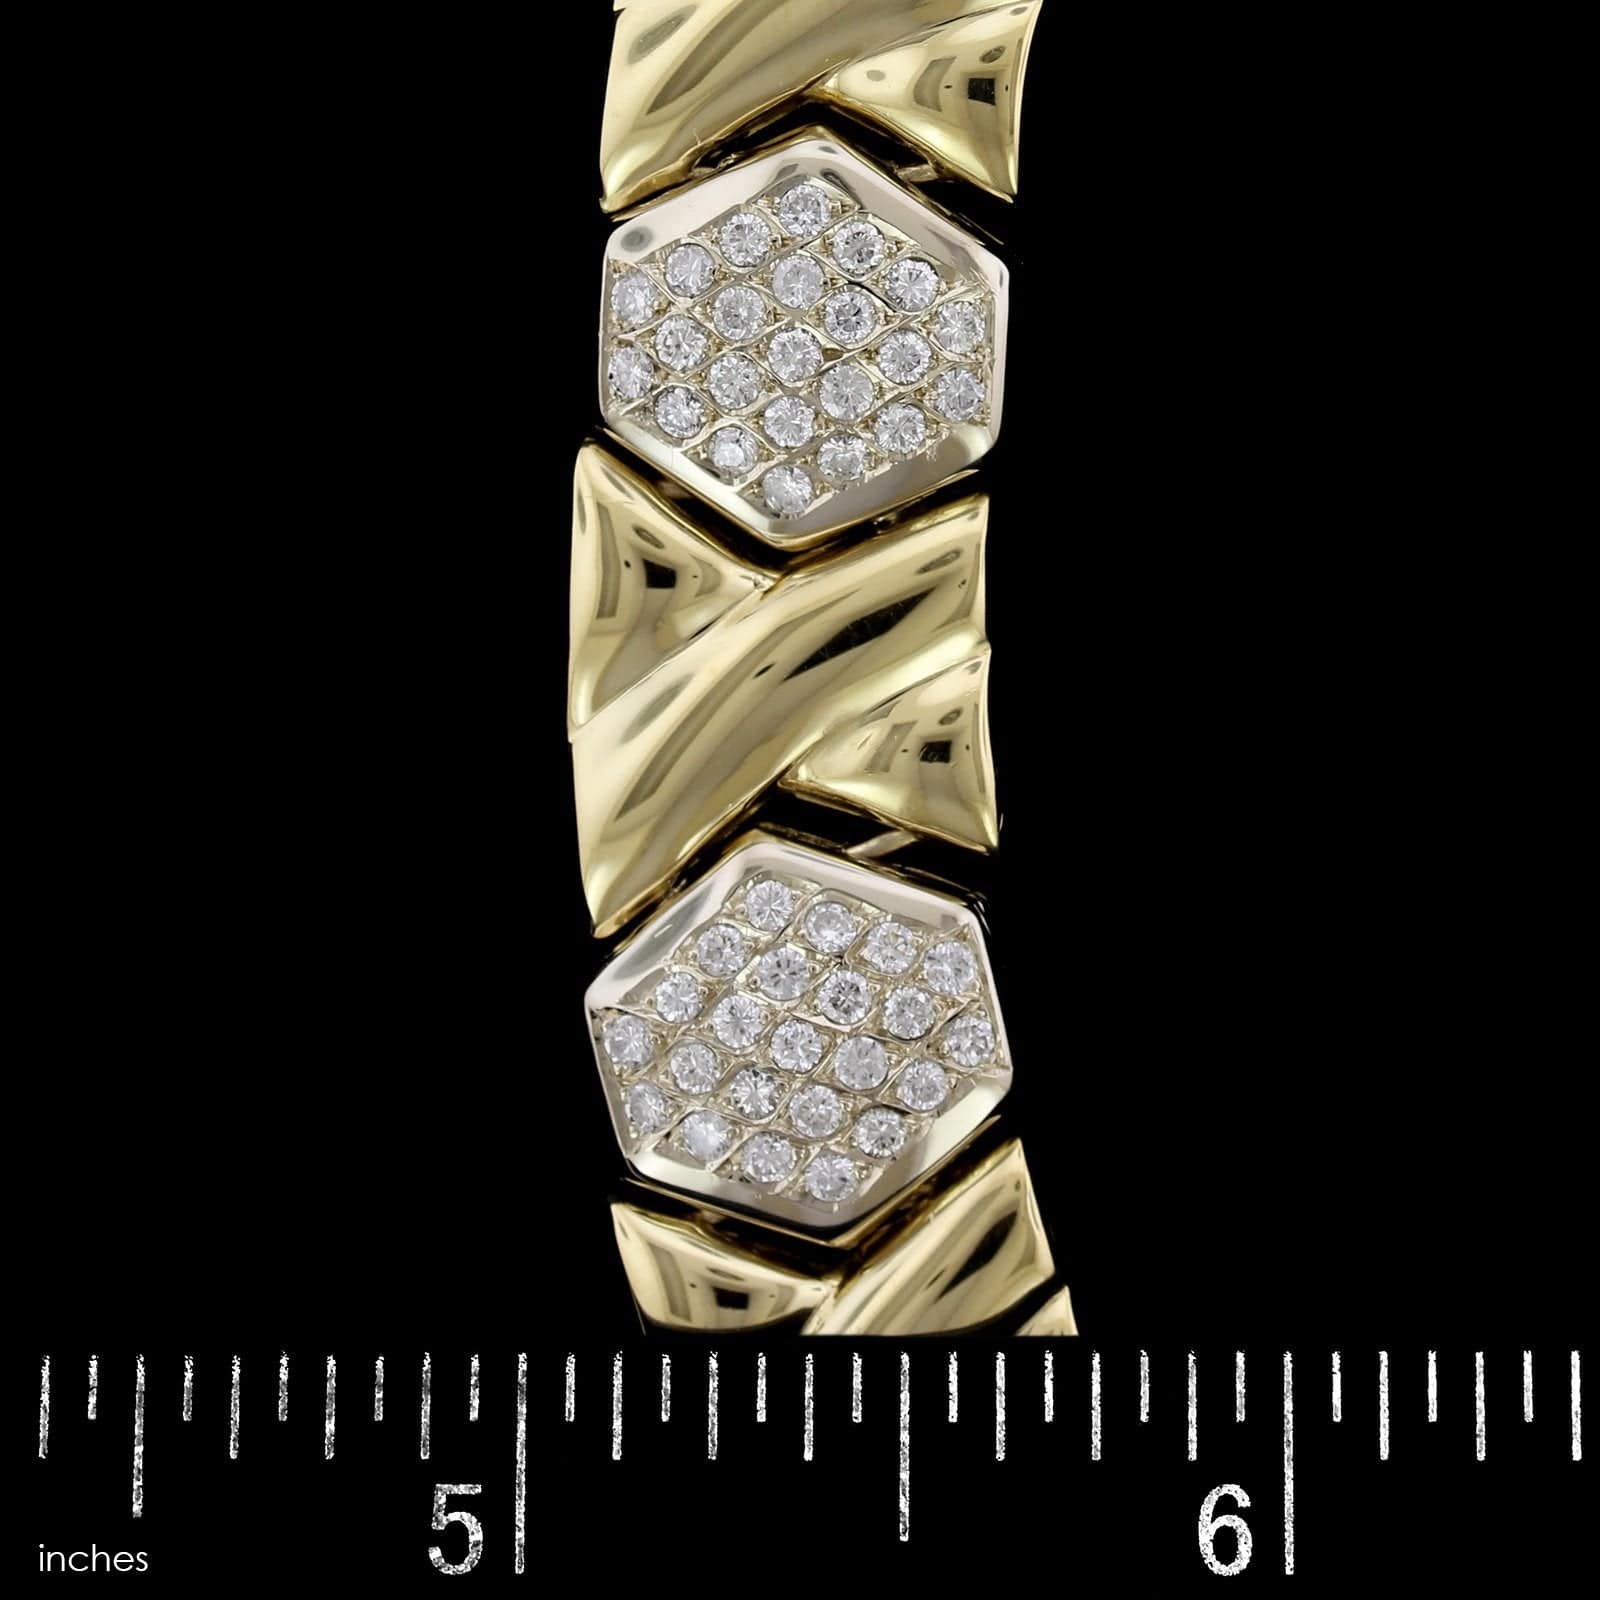 18K Yellow Gold Estate Diamond Necklace